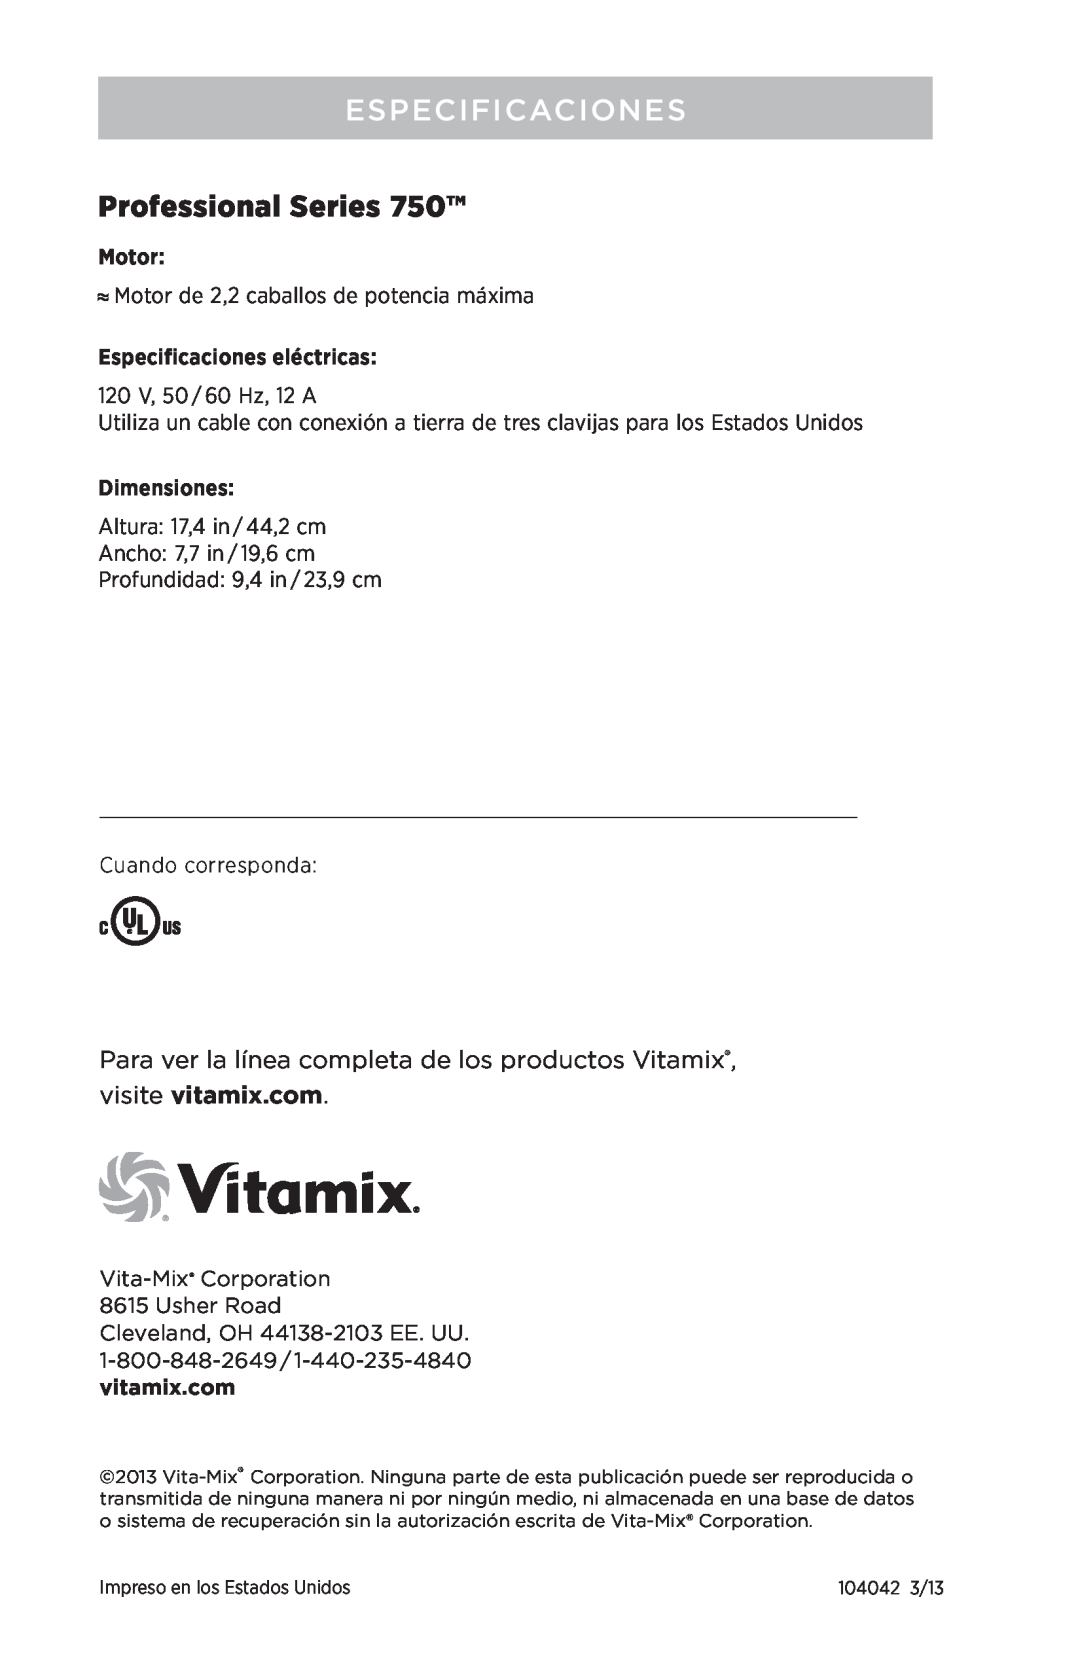 Vita-Mix PROFESSIONAL SERIES 750 manual Especificaciones eléctricas, Dimensiones, Professional Series, Motor 